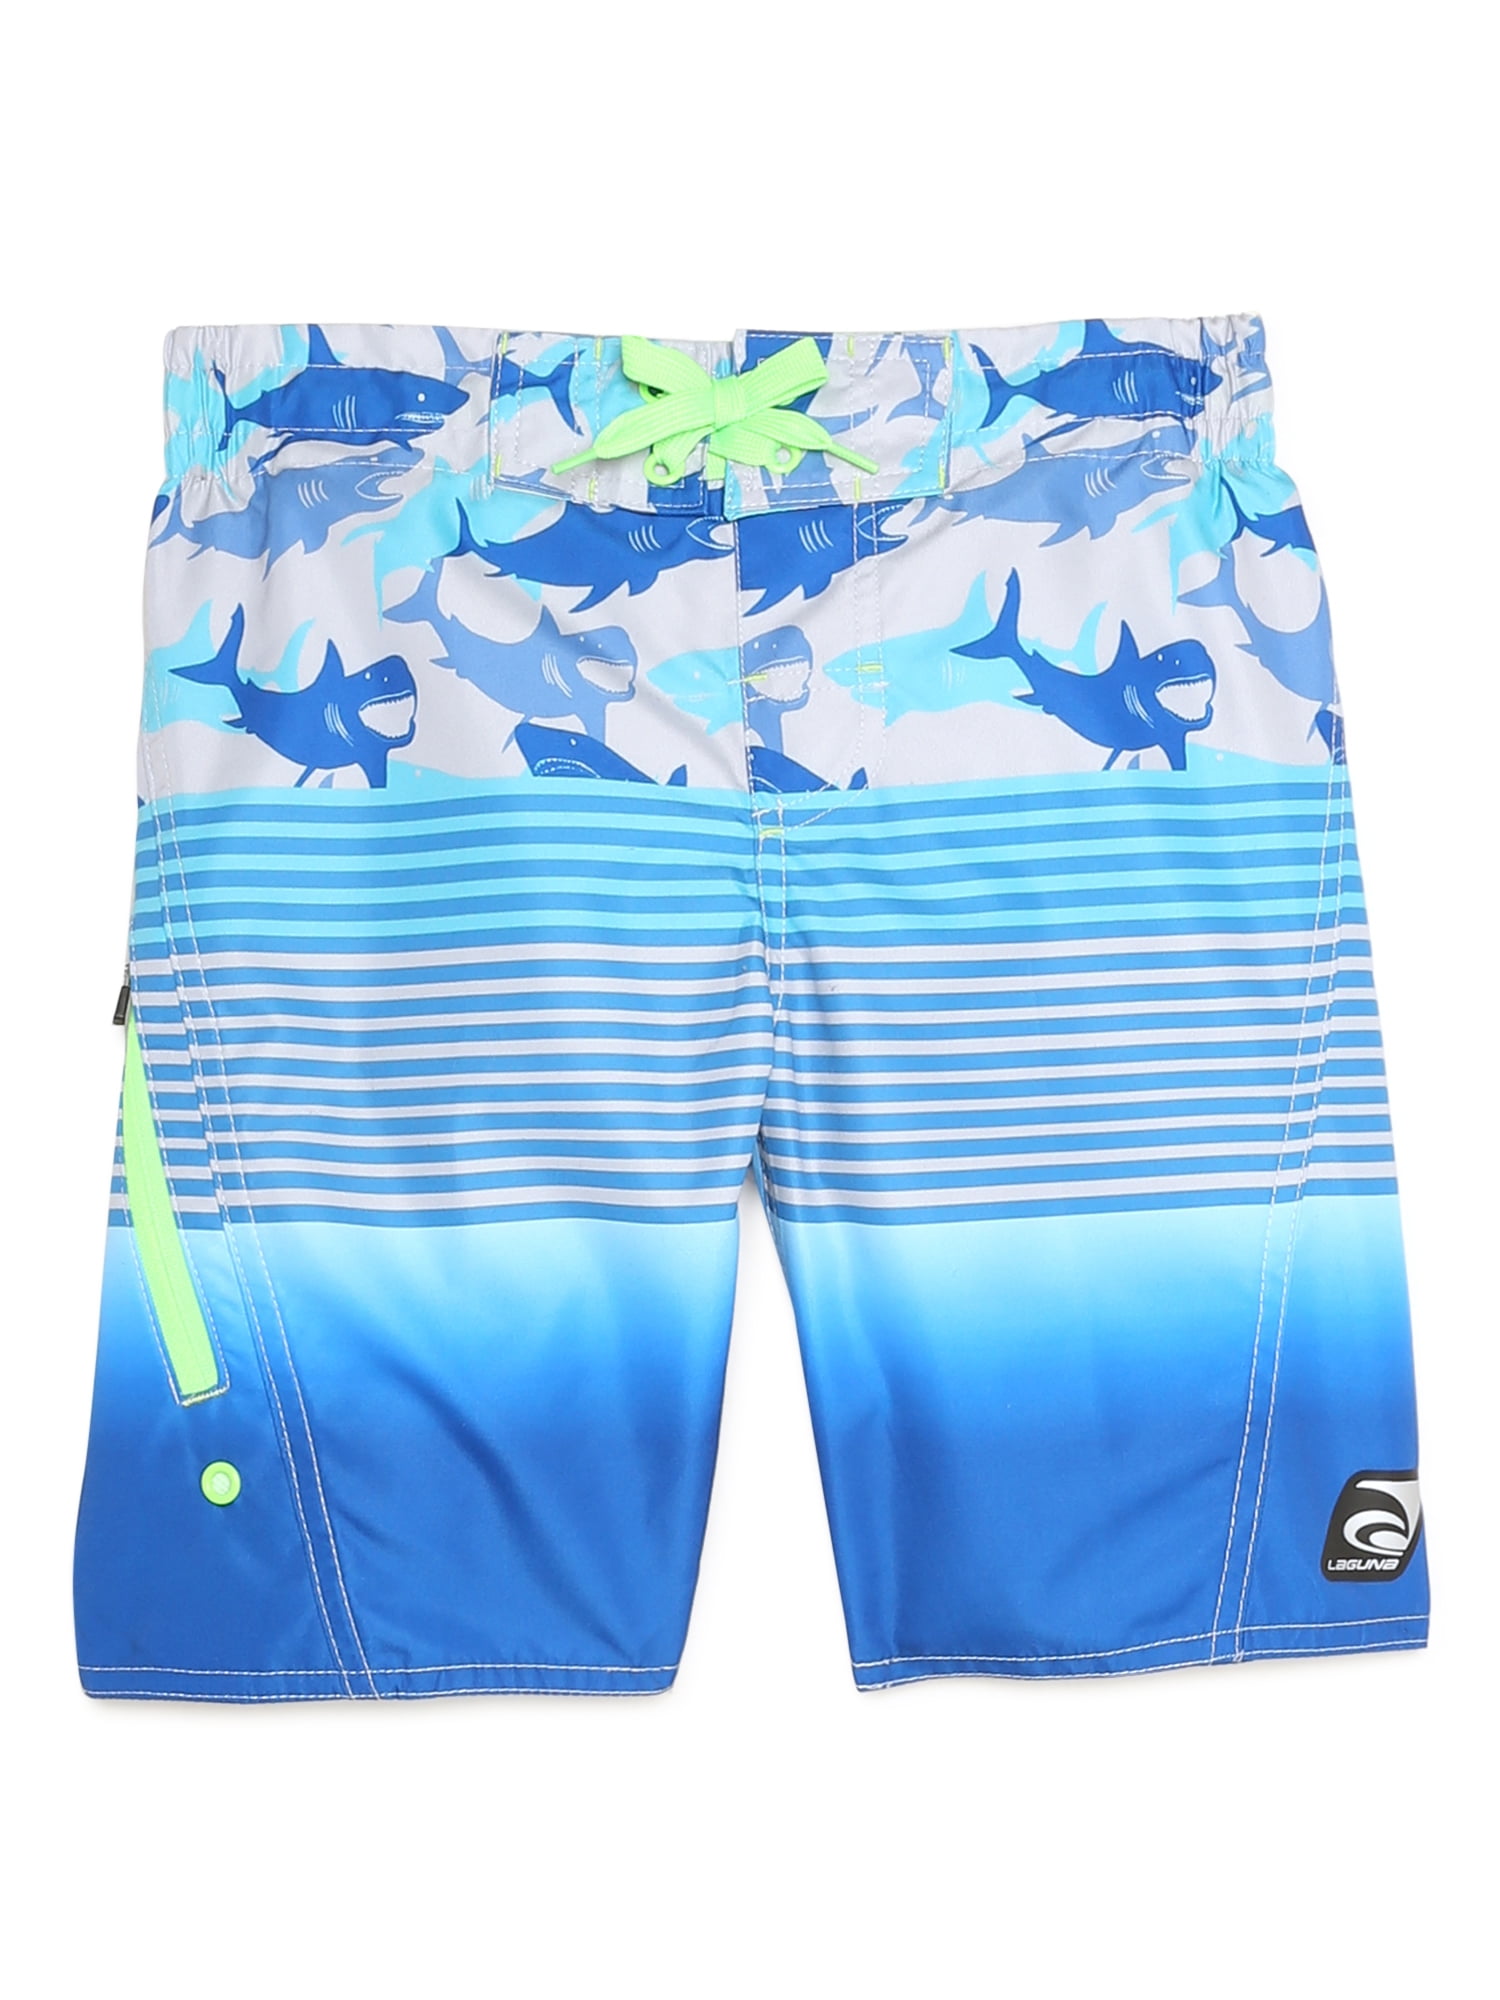 Shark Comic Style Boy Swim Trunks Board Quick Dry Beach Shorts with Pocket 